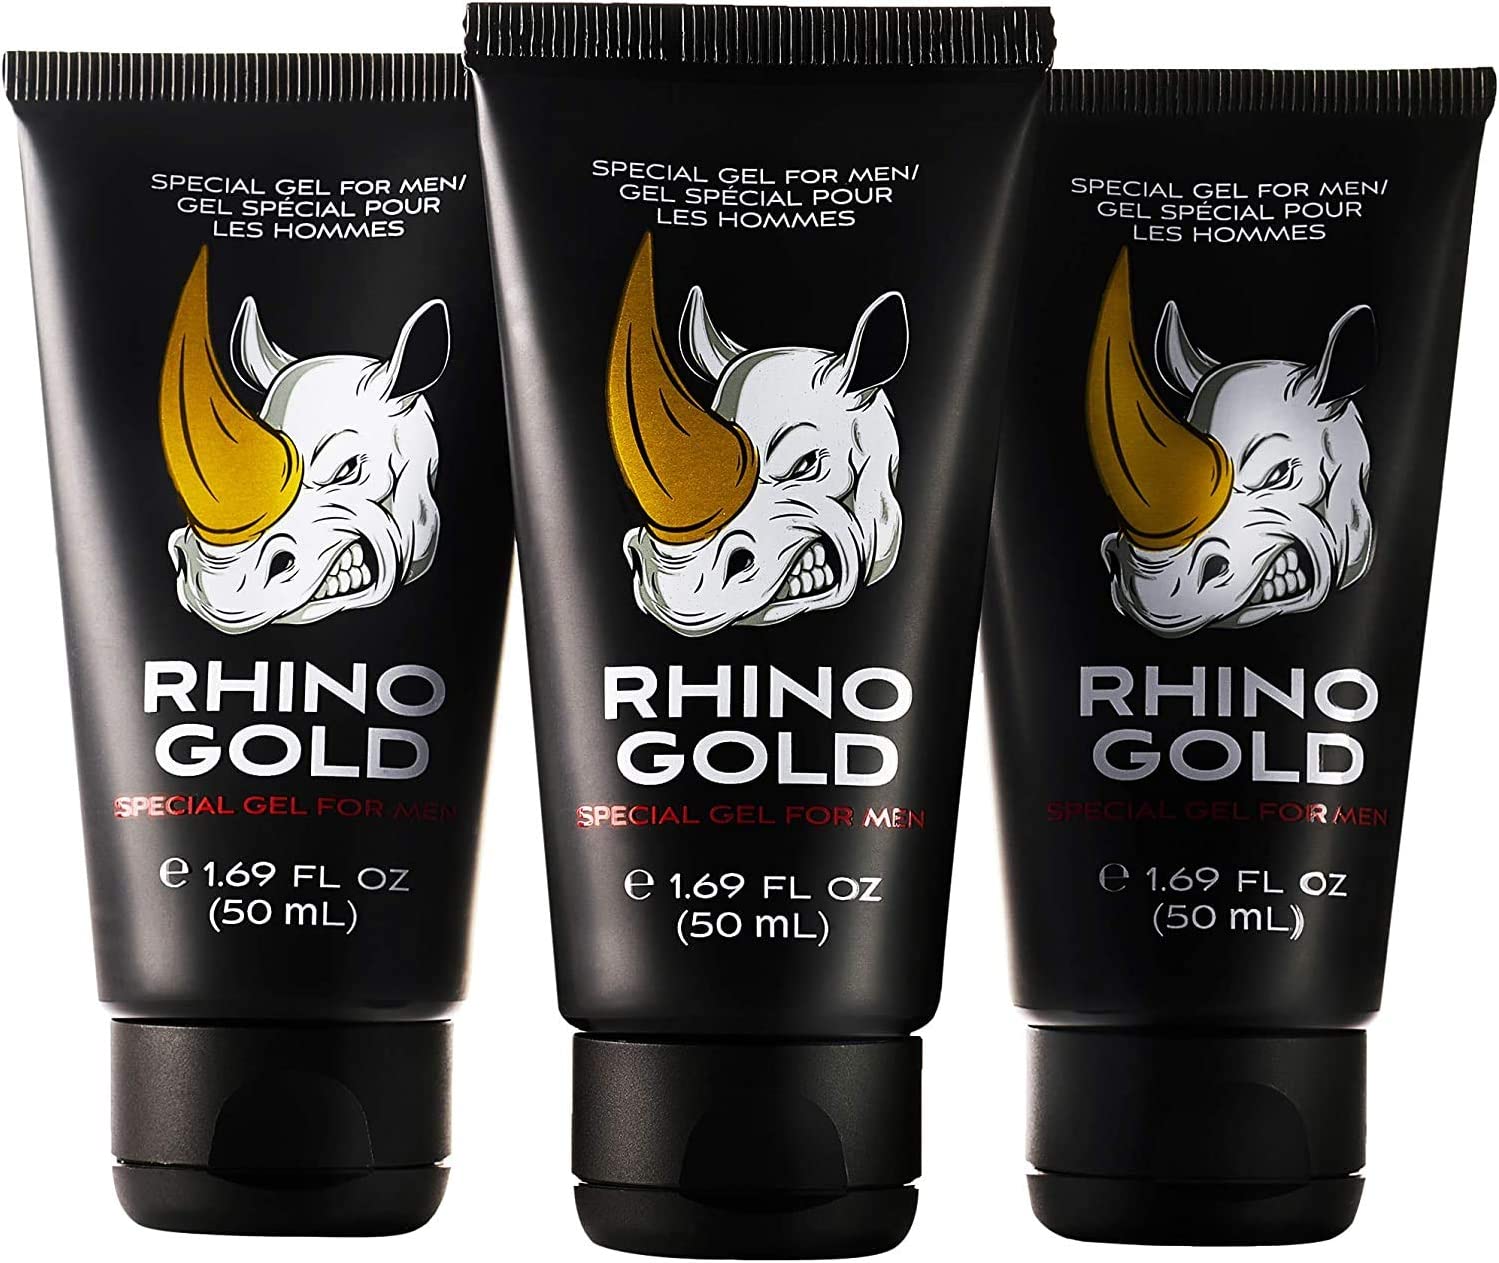 Rhino Gold Gel - en pharmacie - où acheter - sur Amazon - site du fabricant - prix